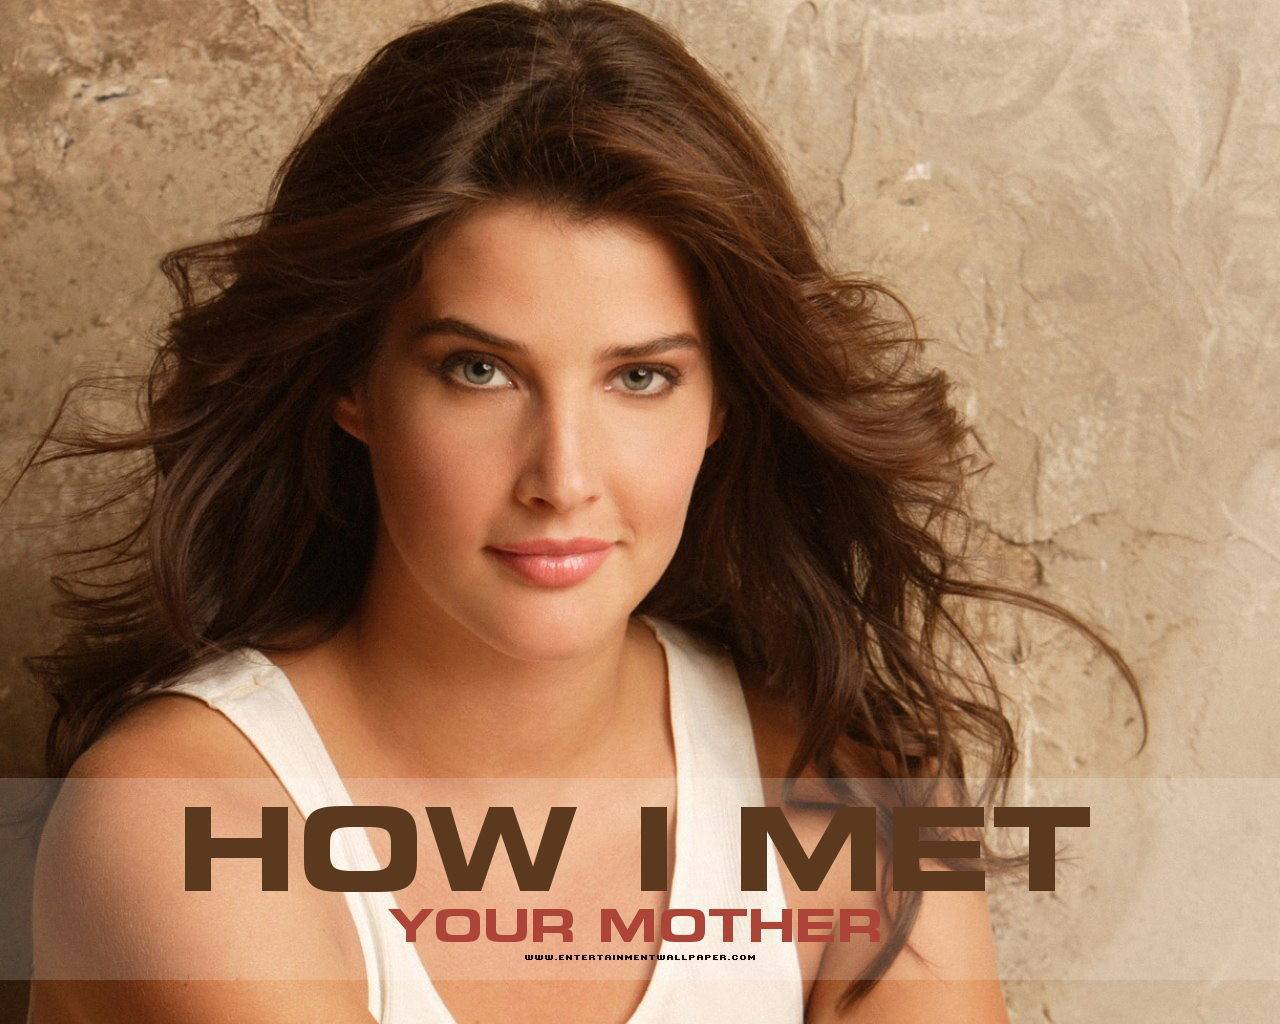 How i met your mother